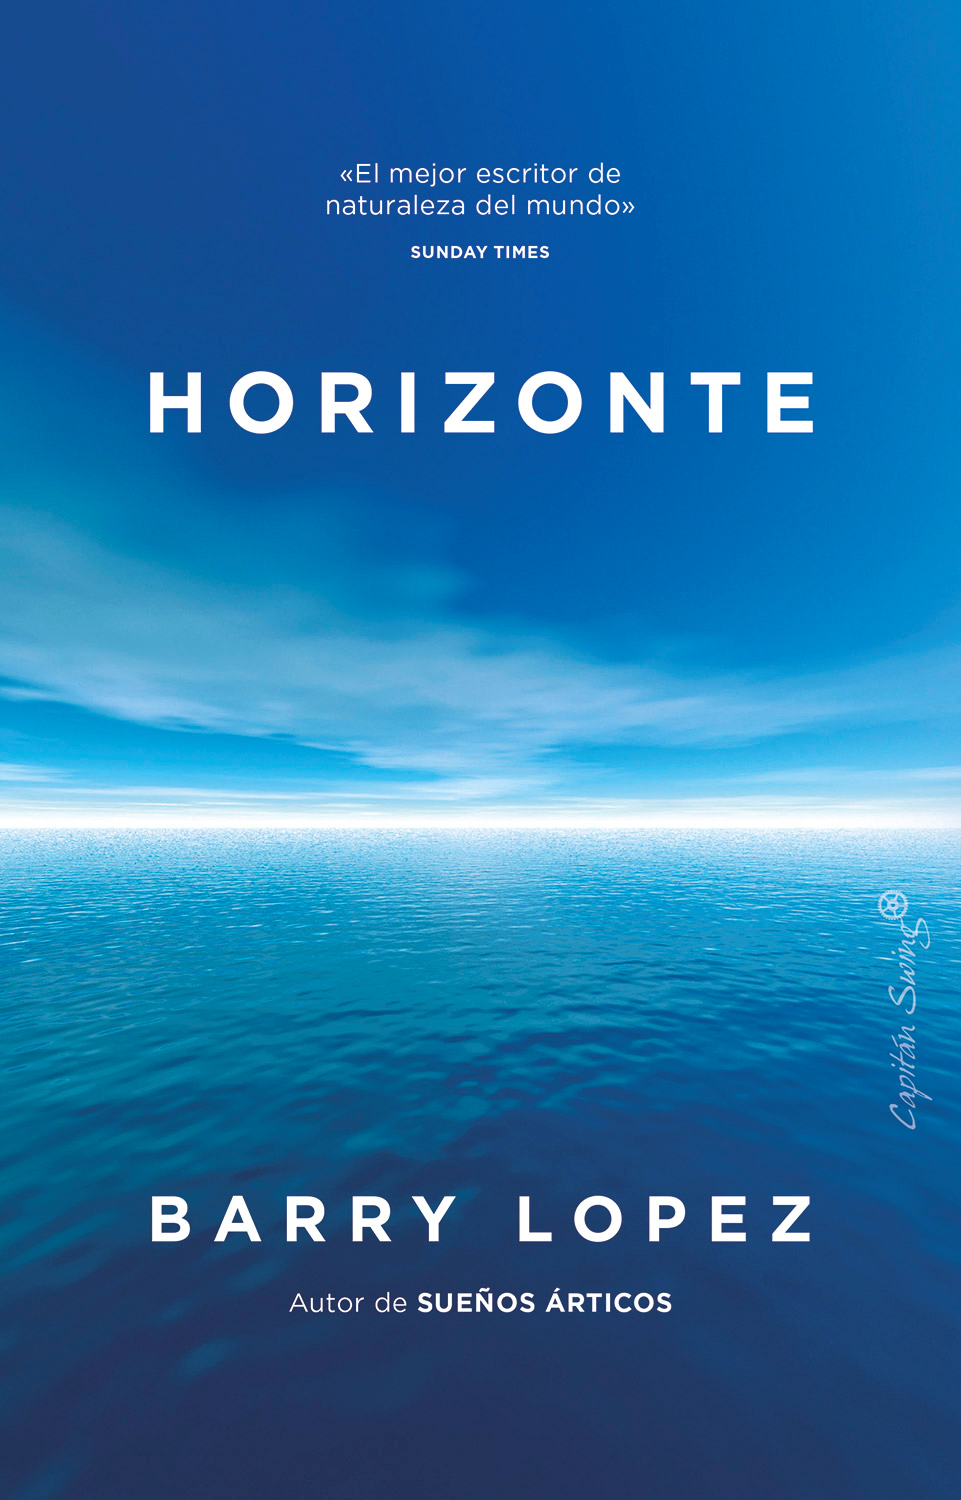  Horizonte, de Barry Lopez (Capitán Swing)